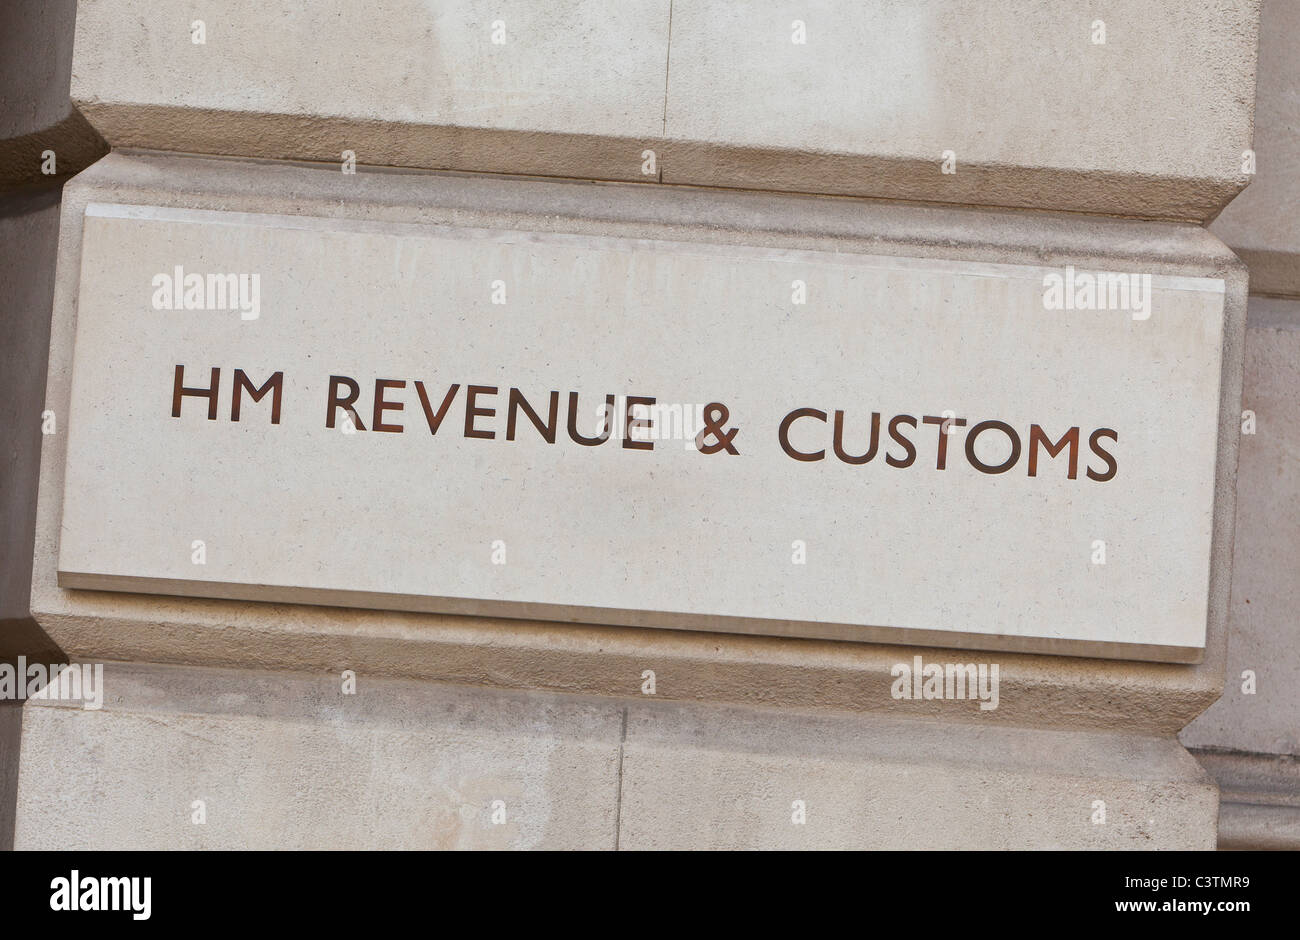 HM Revenue & Customs sign, Whitehall, London, England, UK Stock Photo